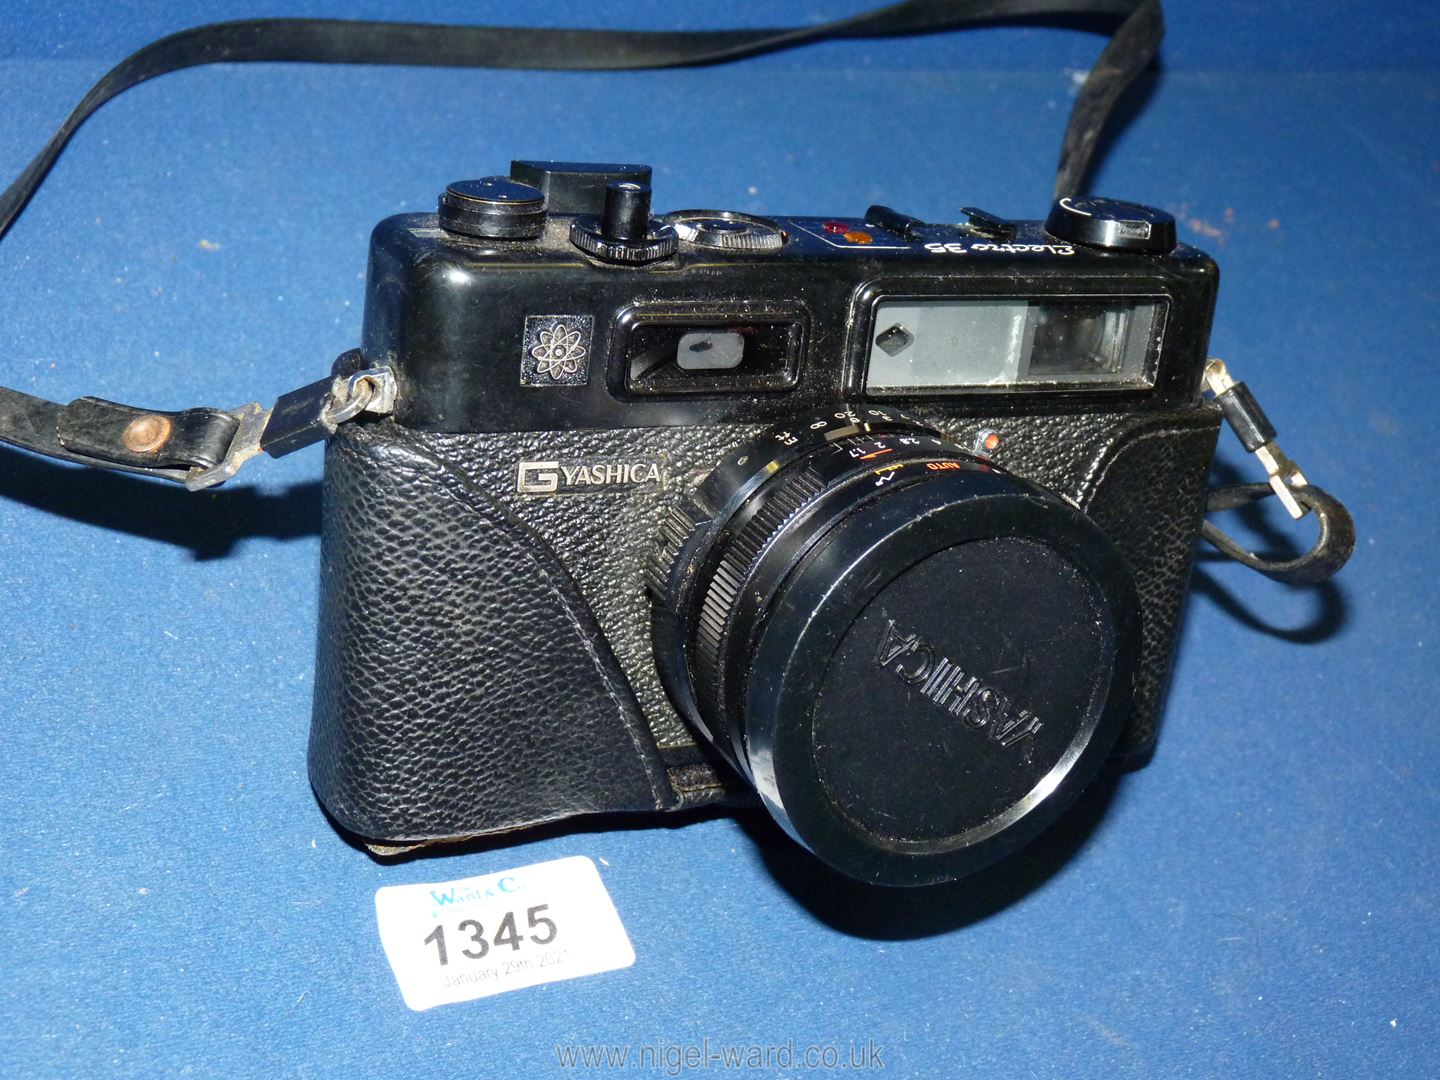 A Yashica Electro 35mm Camera with Yashica lens. - Image 2 of 2